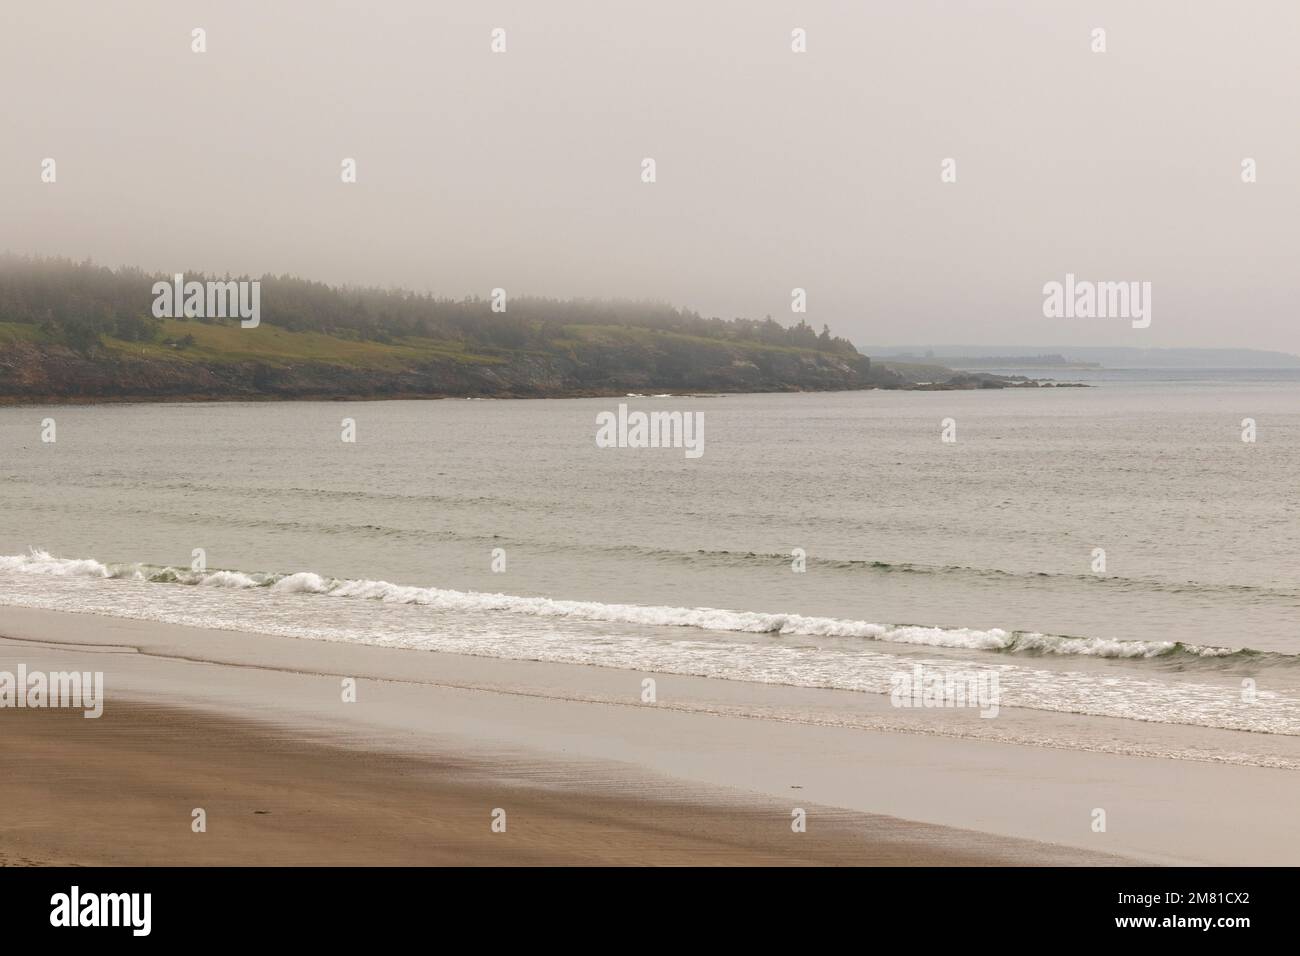 The foggy view from Cape St. Mary's beach, Nova Scotia. Stock Photo